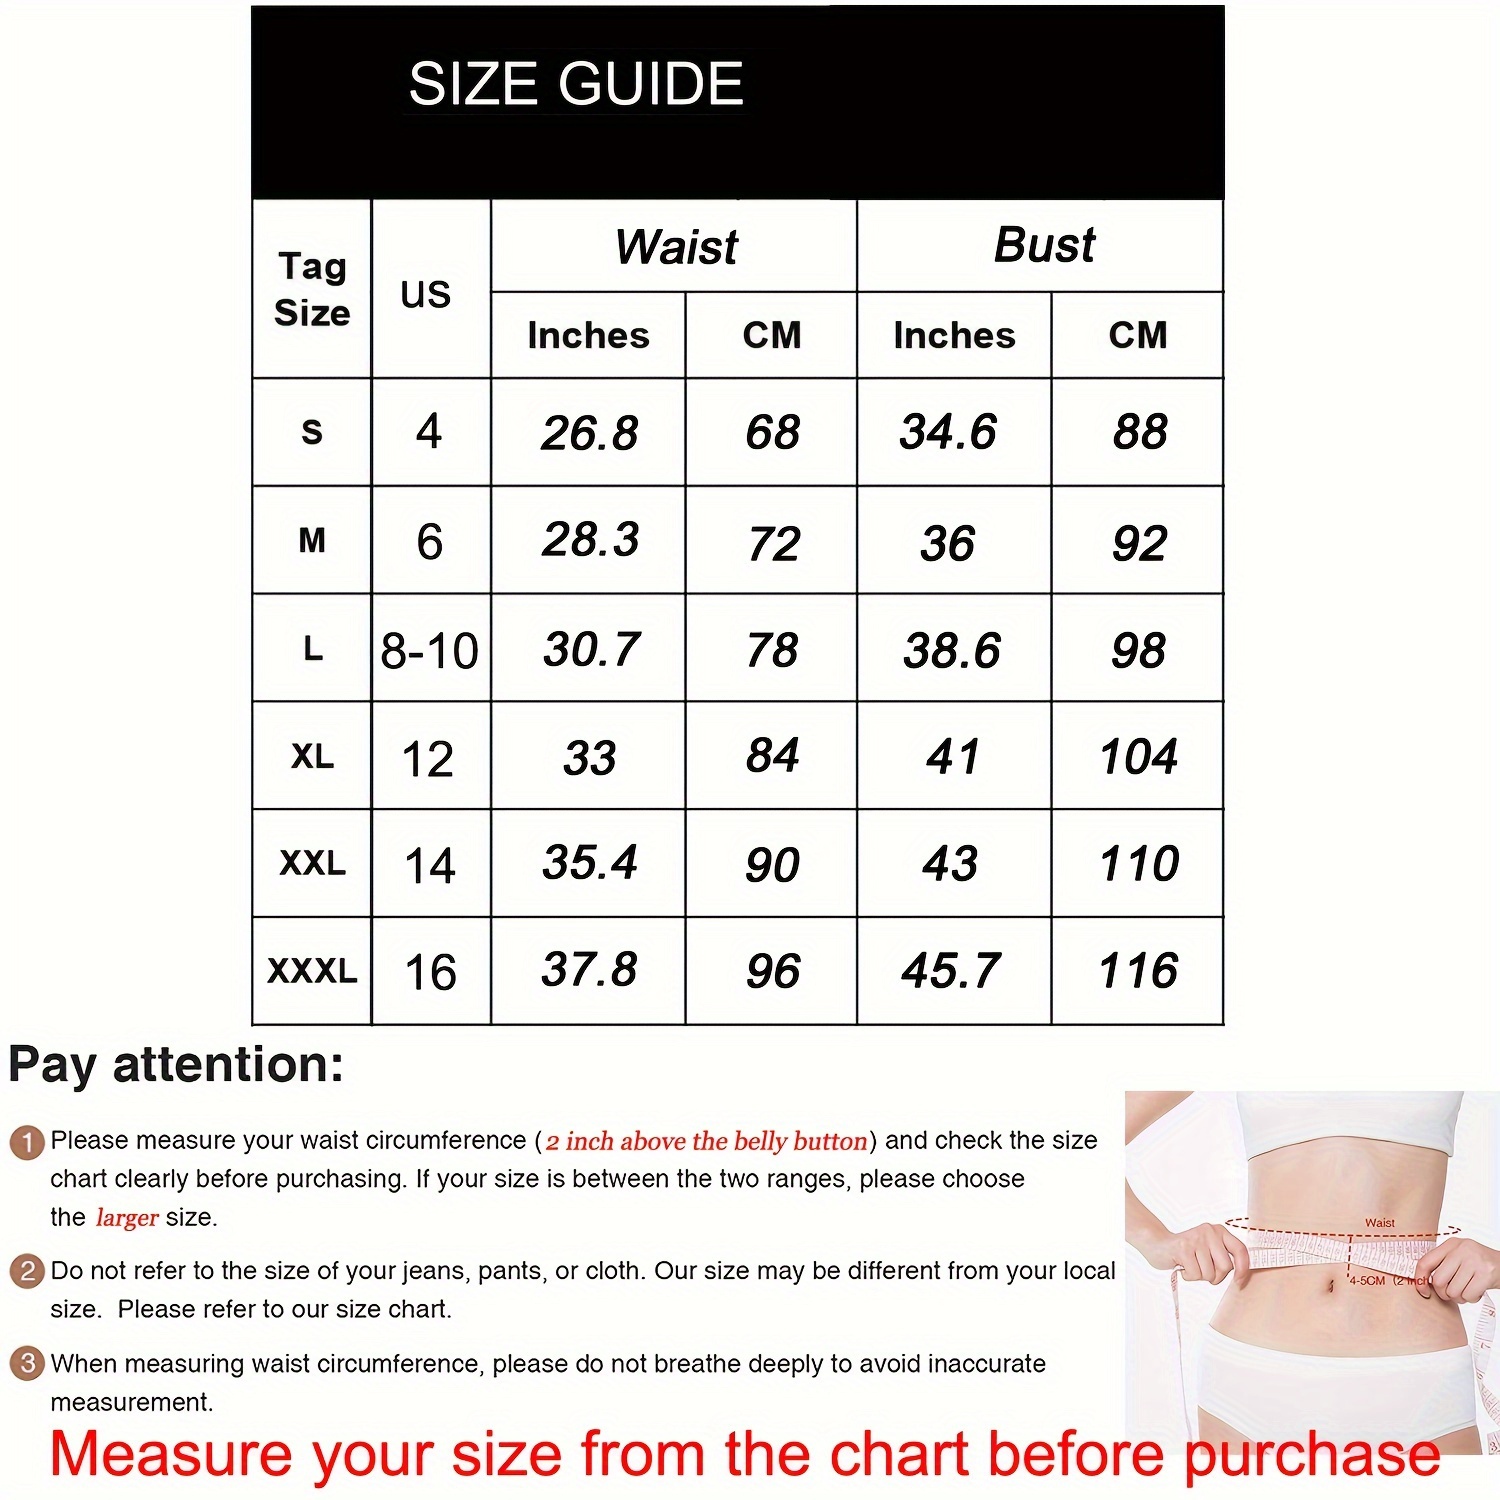 Order A Size Up, 1pc Thin Sweat Vest Sauna Sweat Suit Body Shapewear For  Women